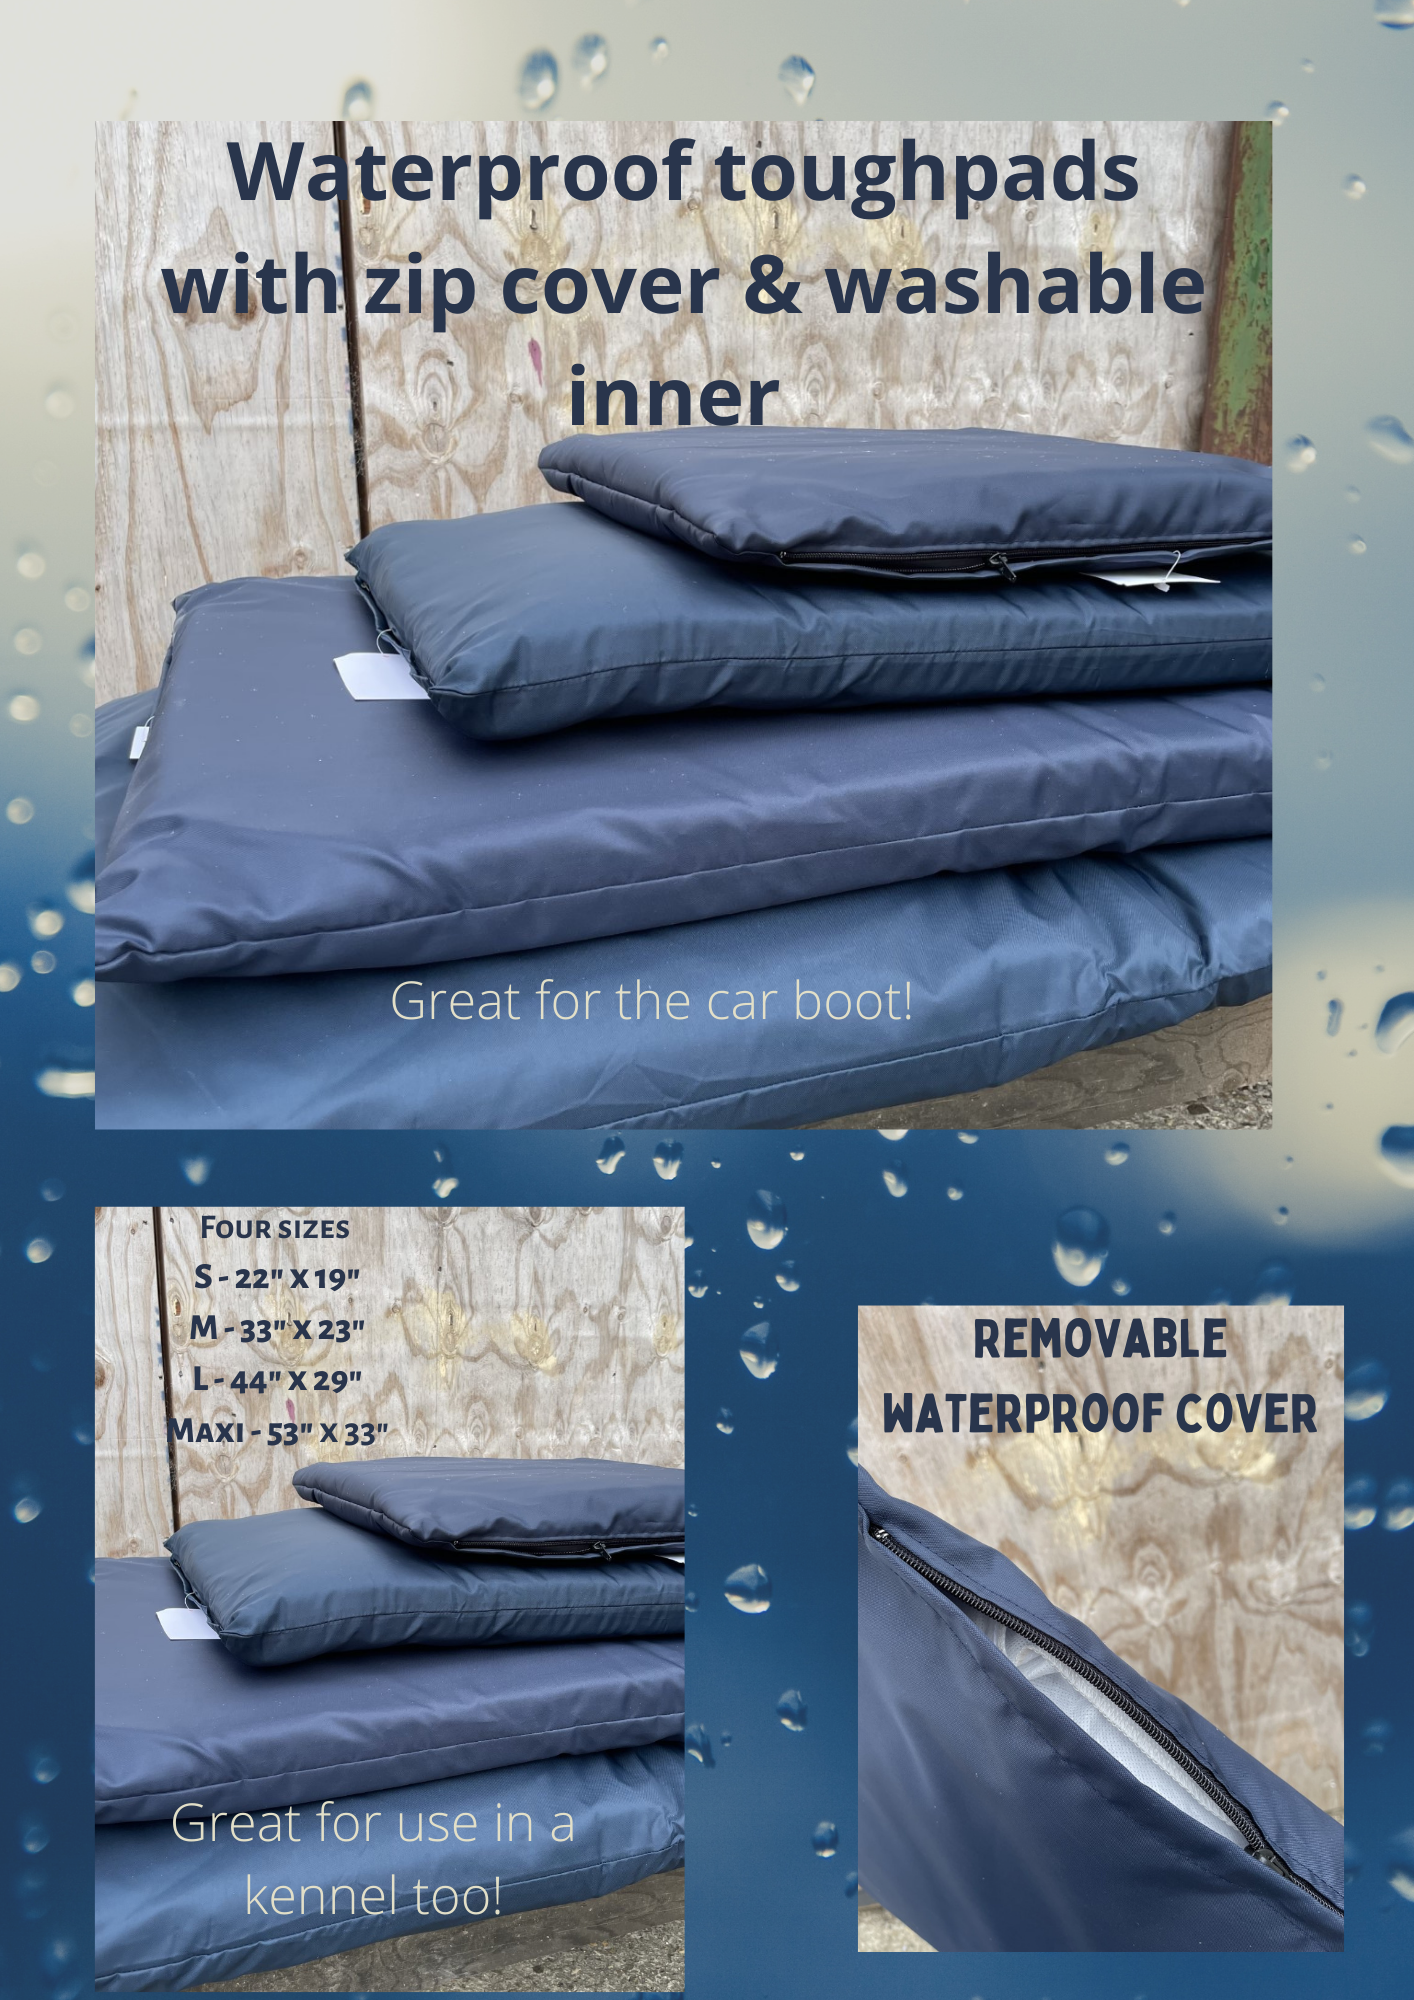 Waterproof washable beds!